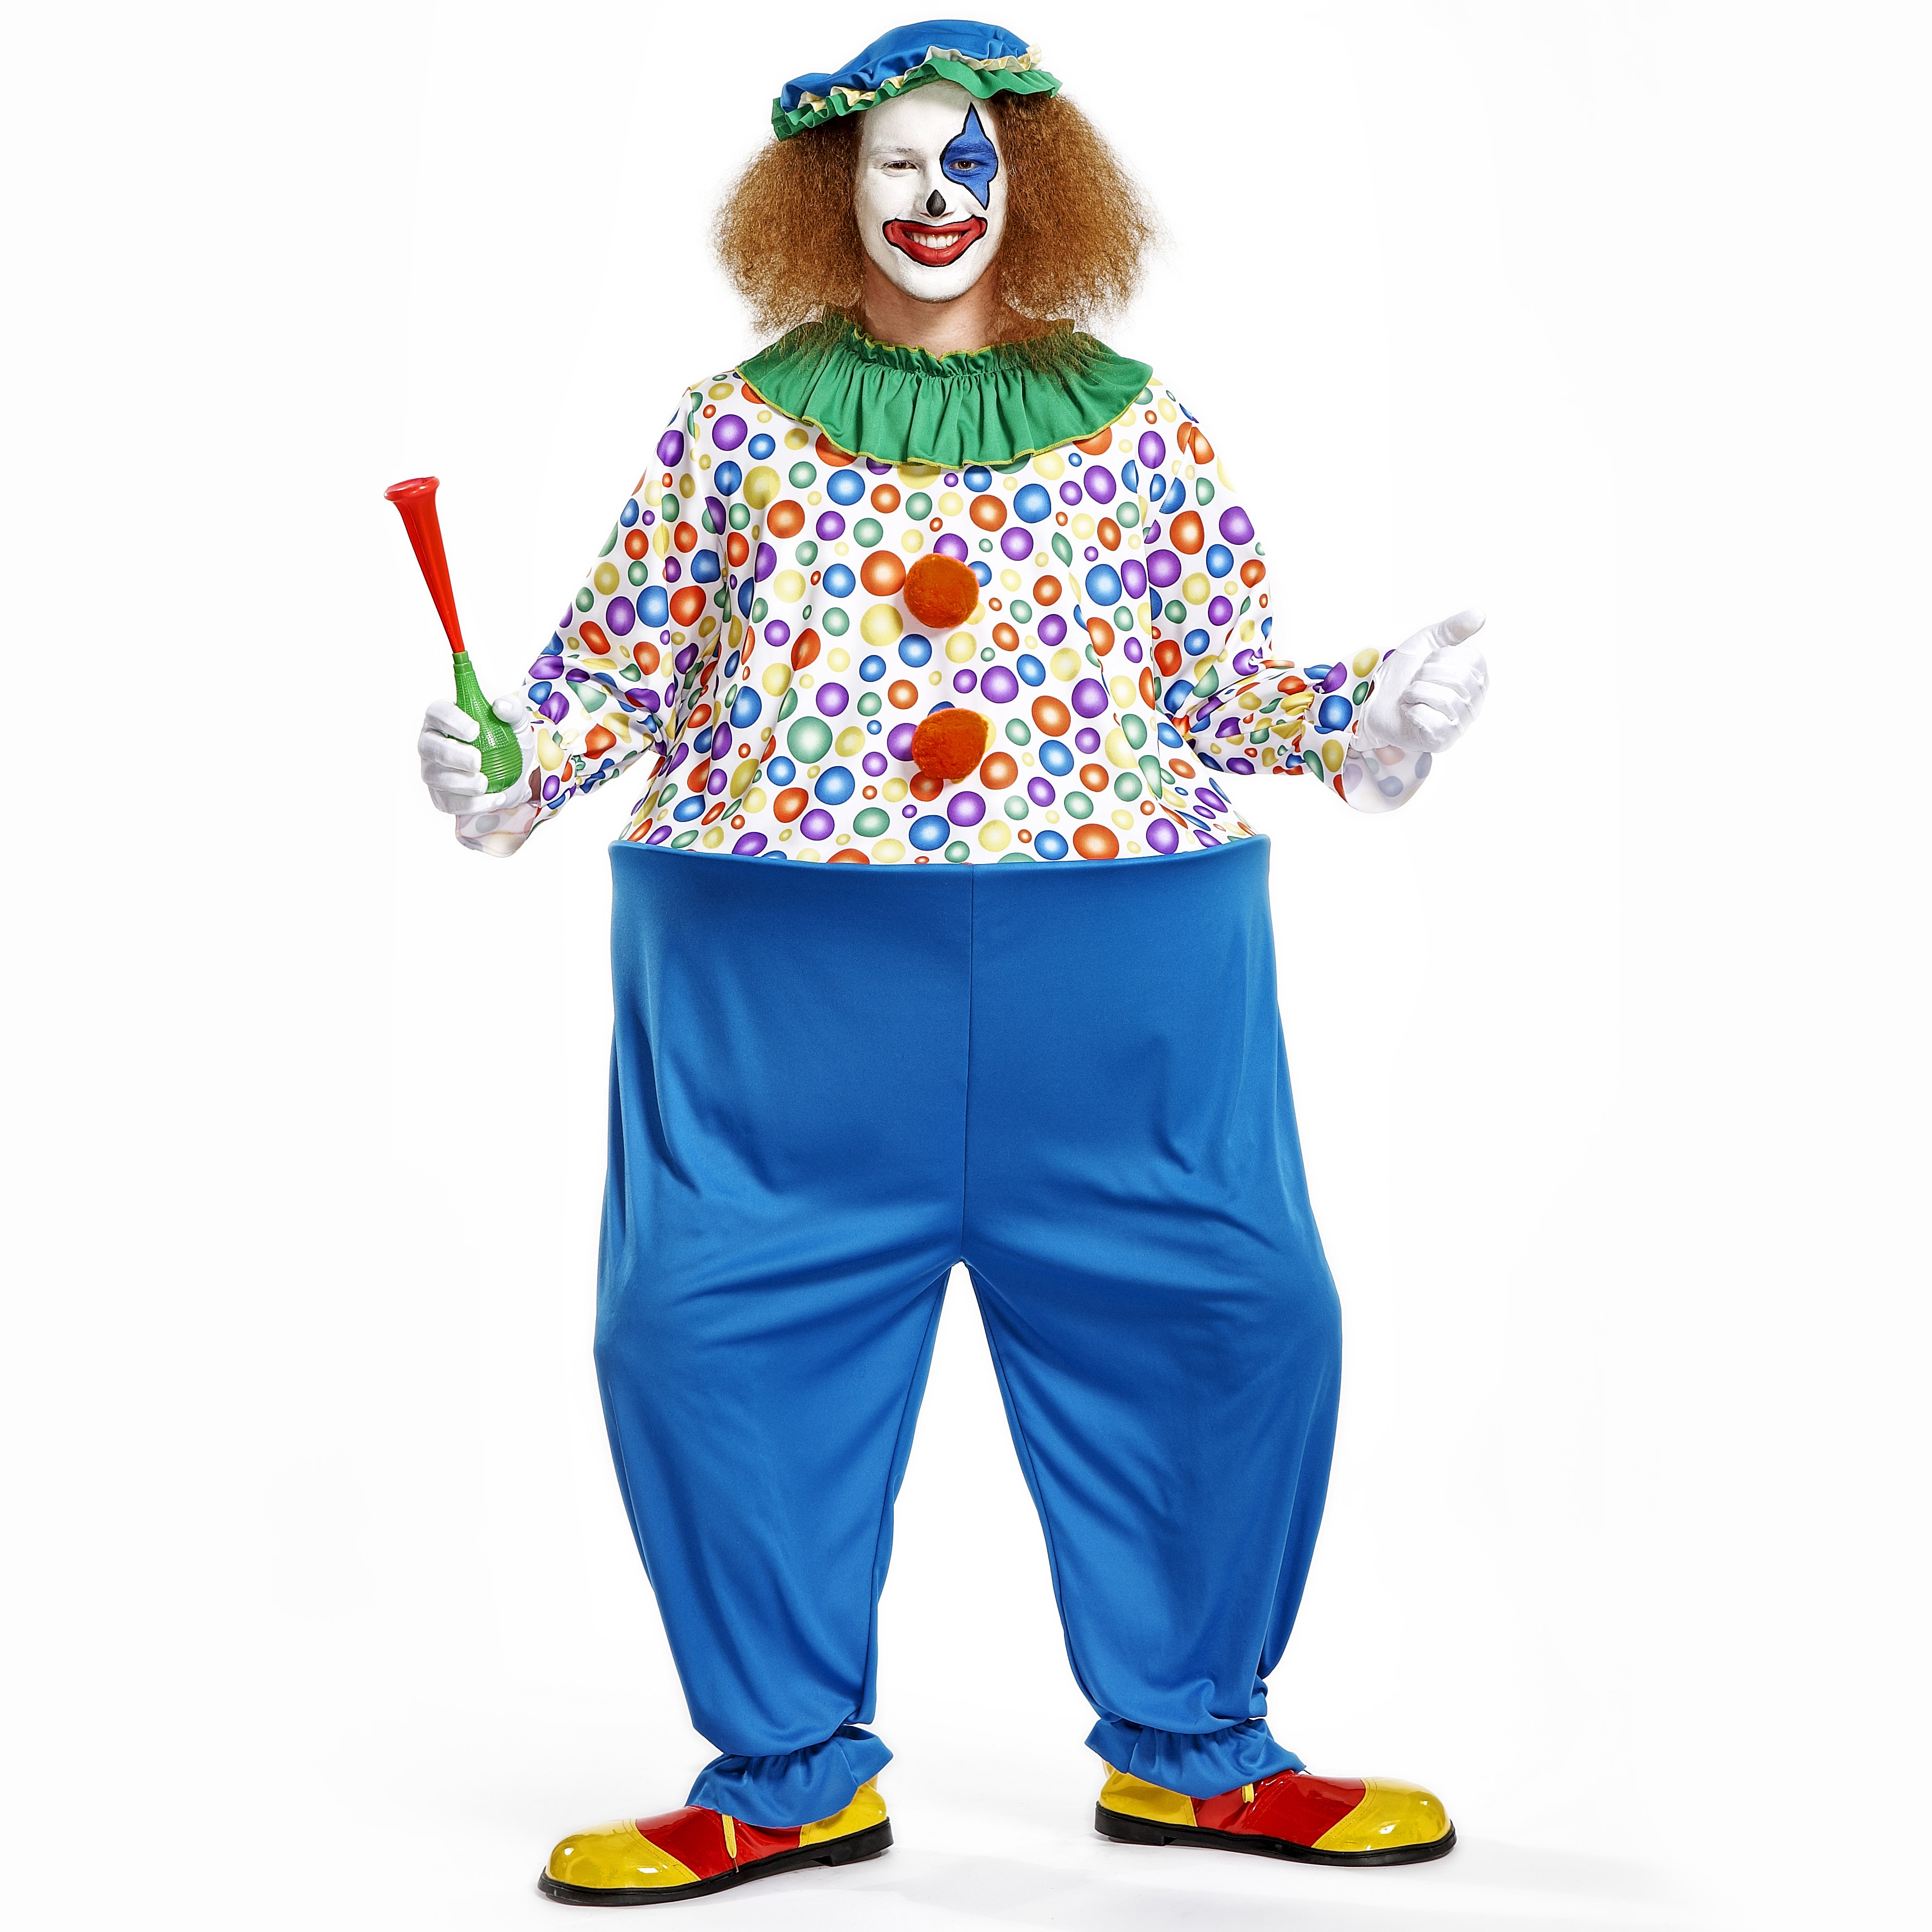 Crazy Clown Adult Costume - SpicyLegs.com